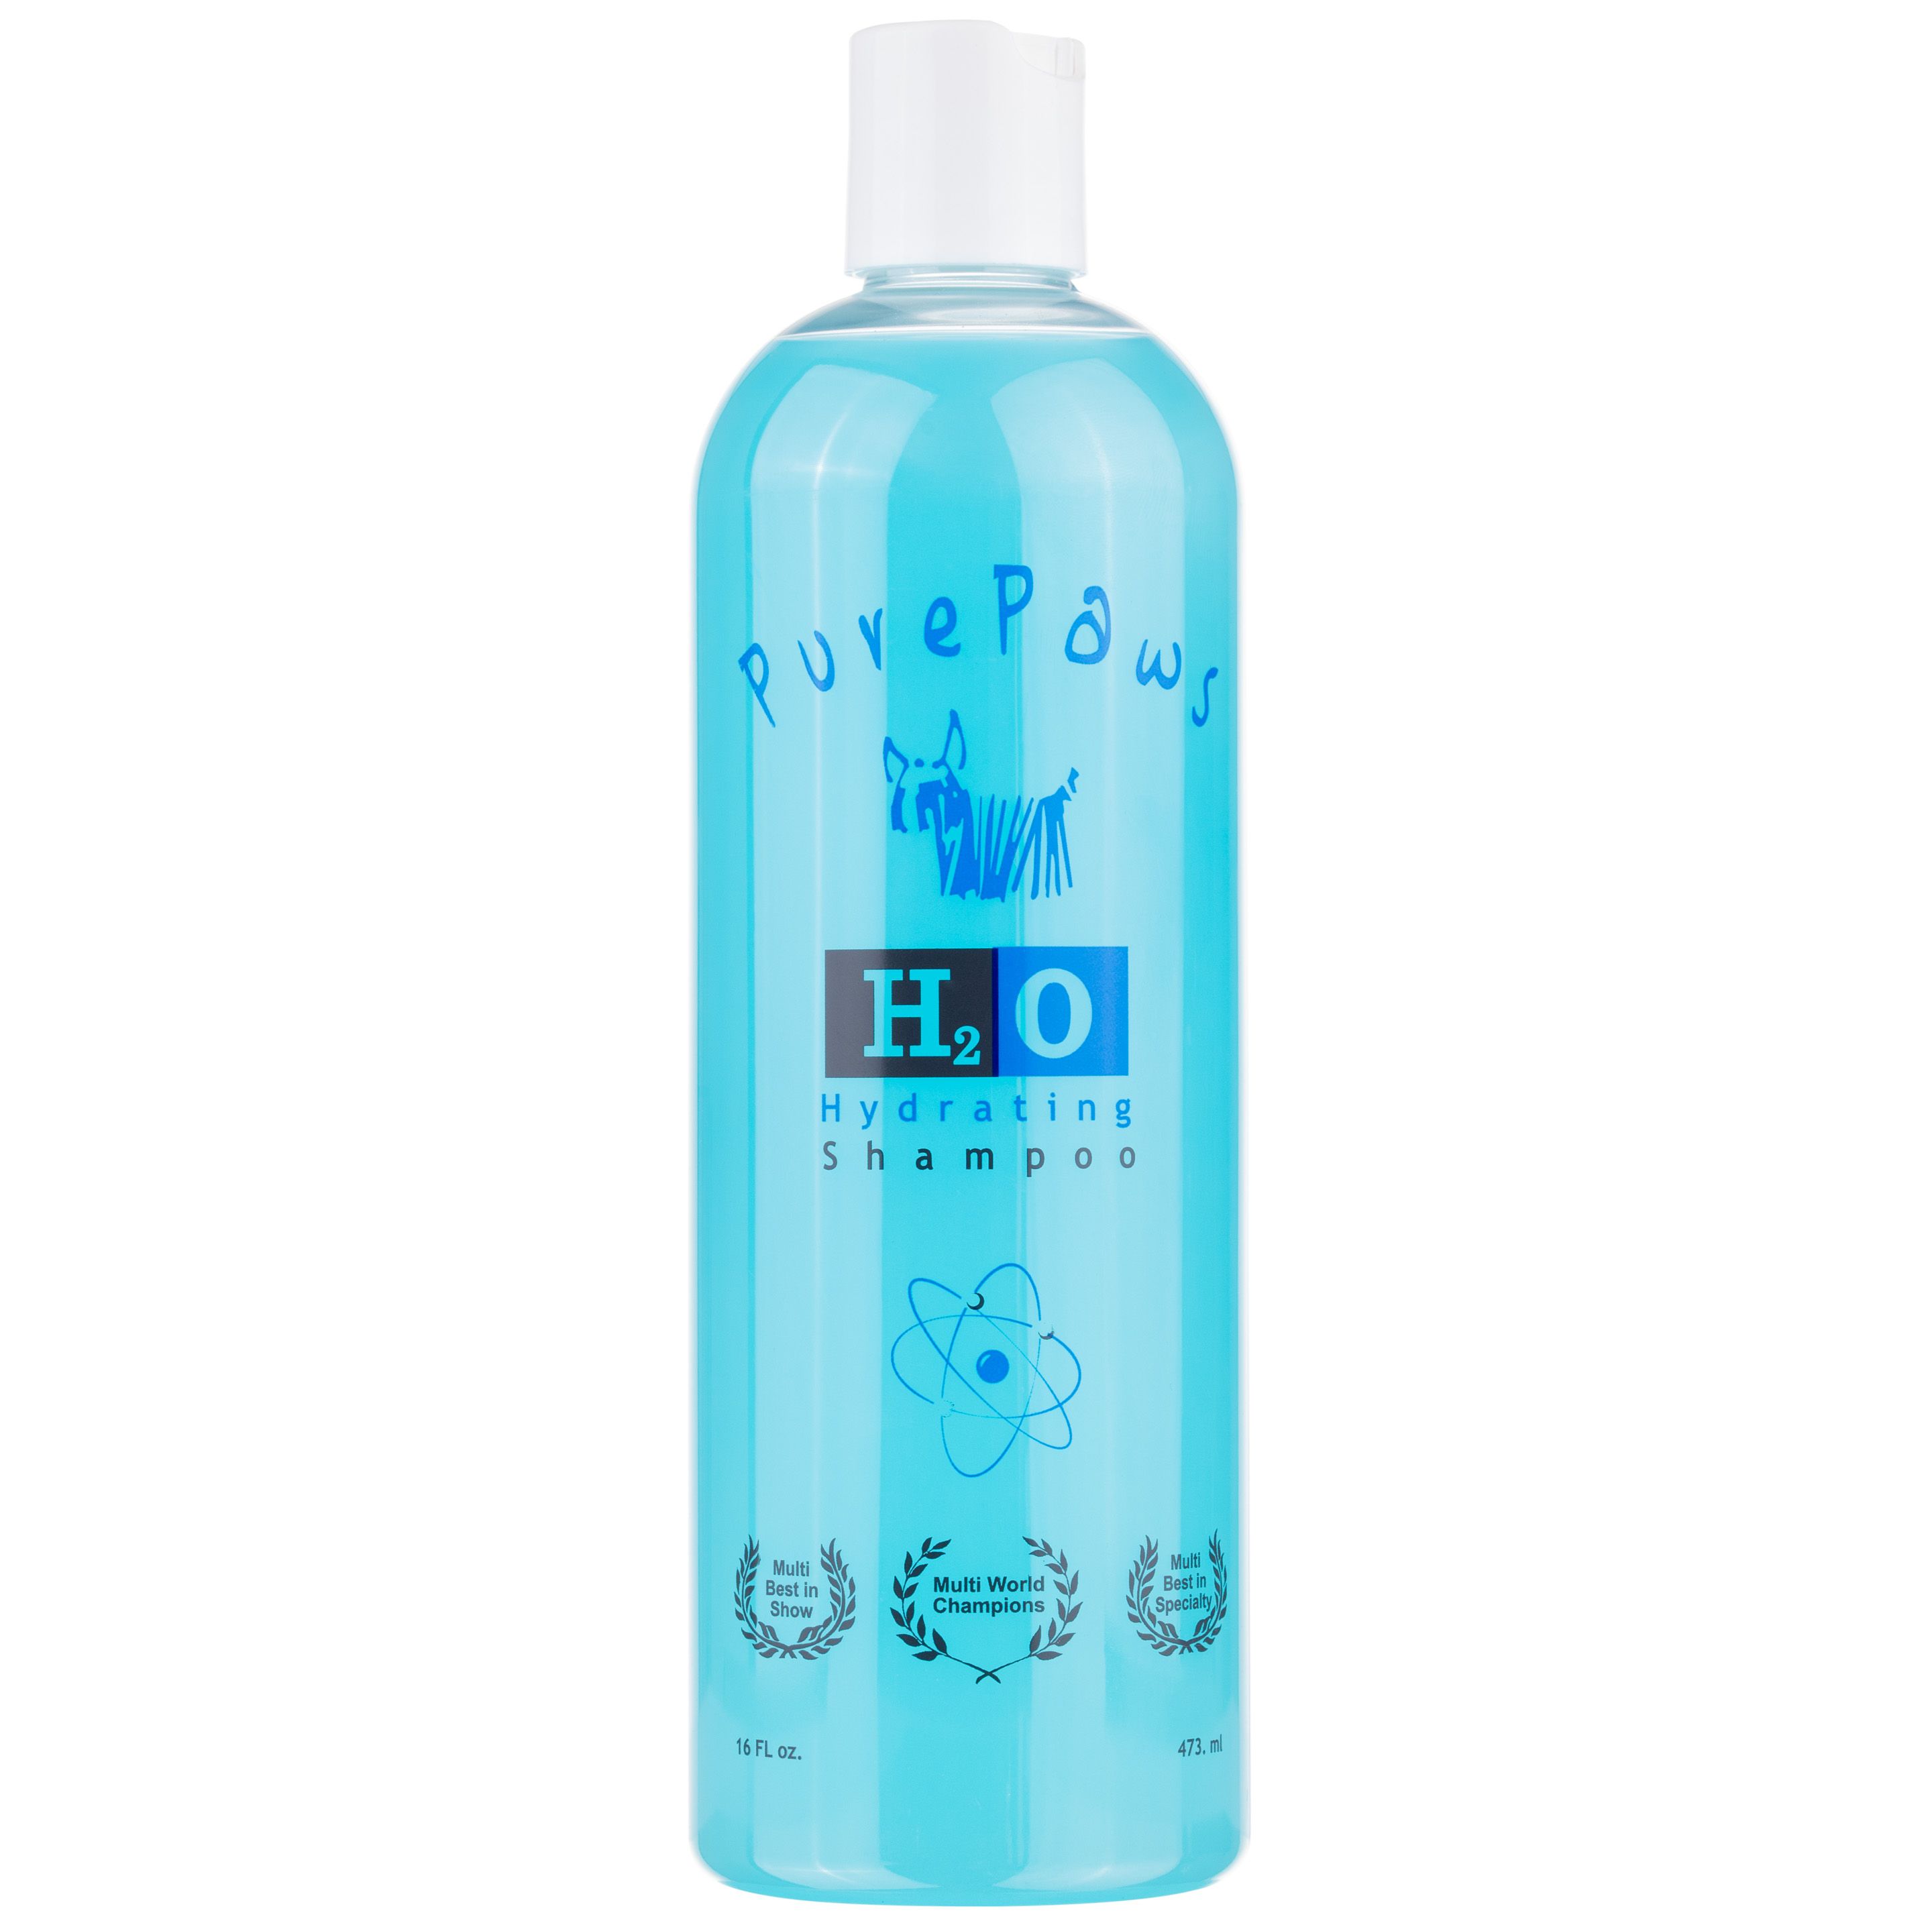 h2o szampon 1 9l cena